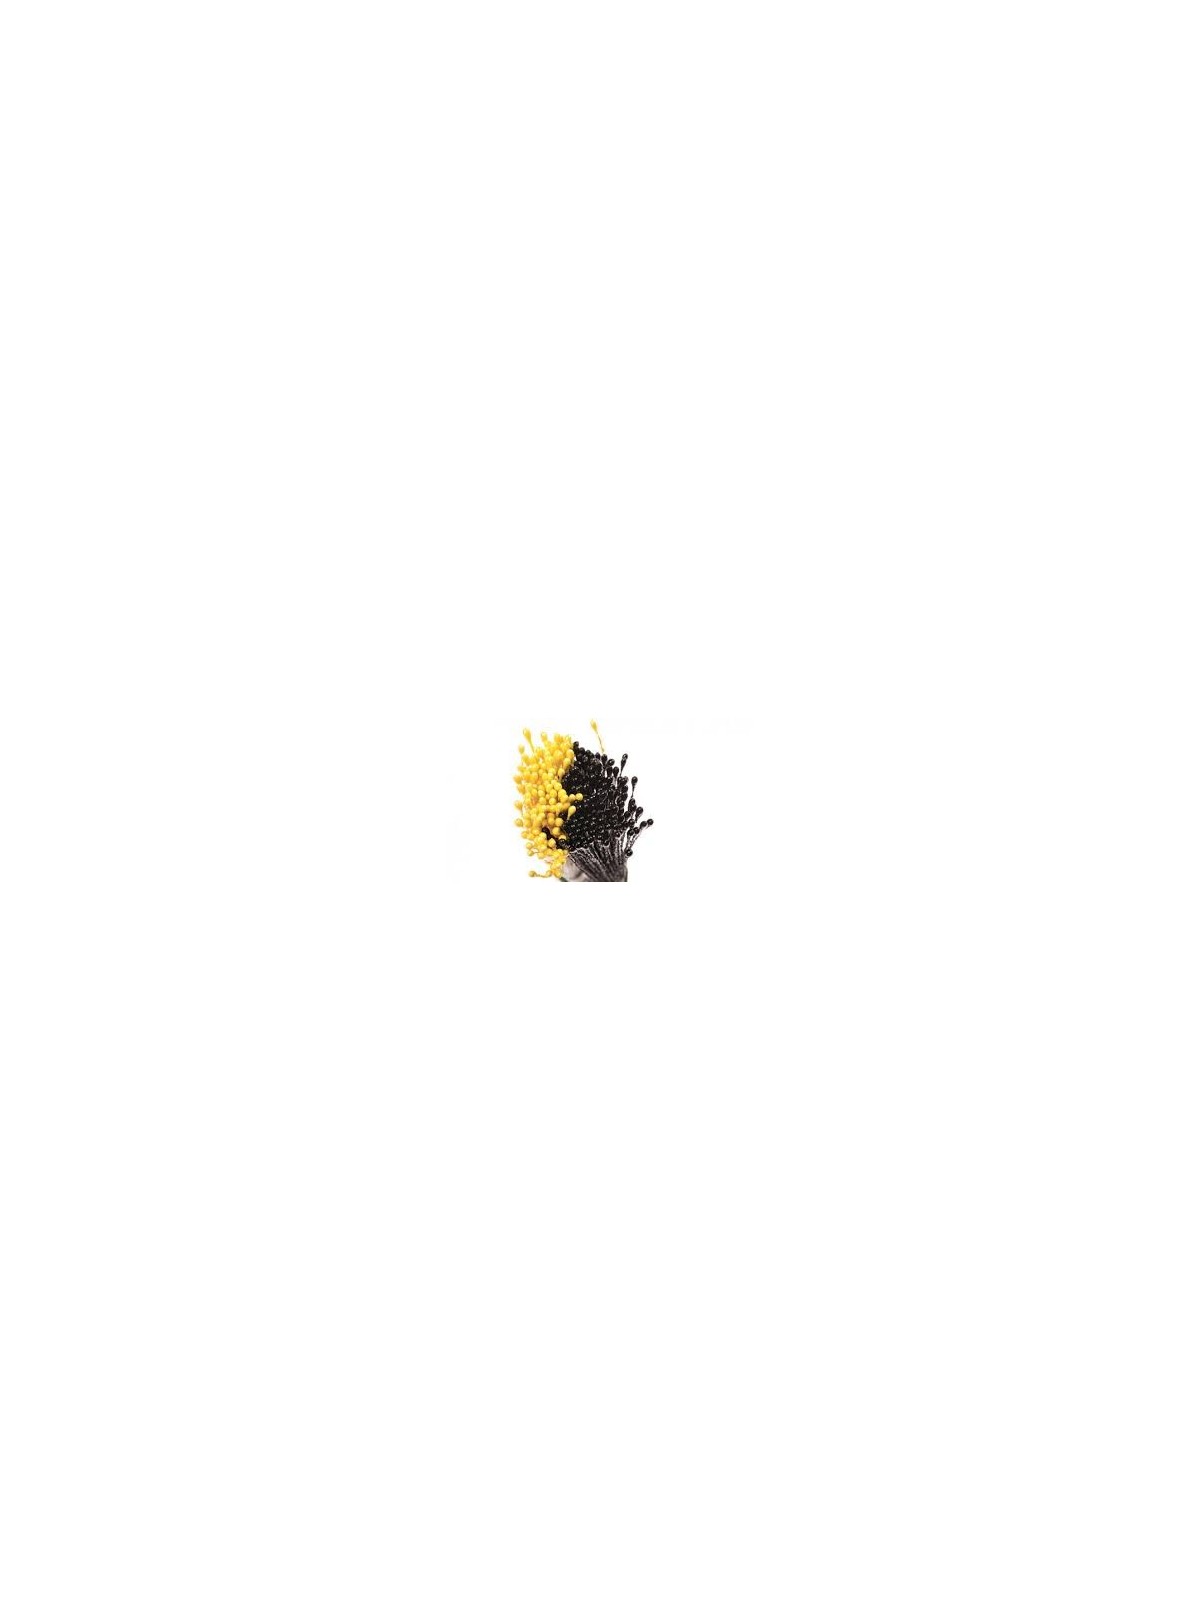 Decora Flower Stamen  - medium - pearl dark yellow / black  288pcs